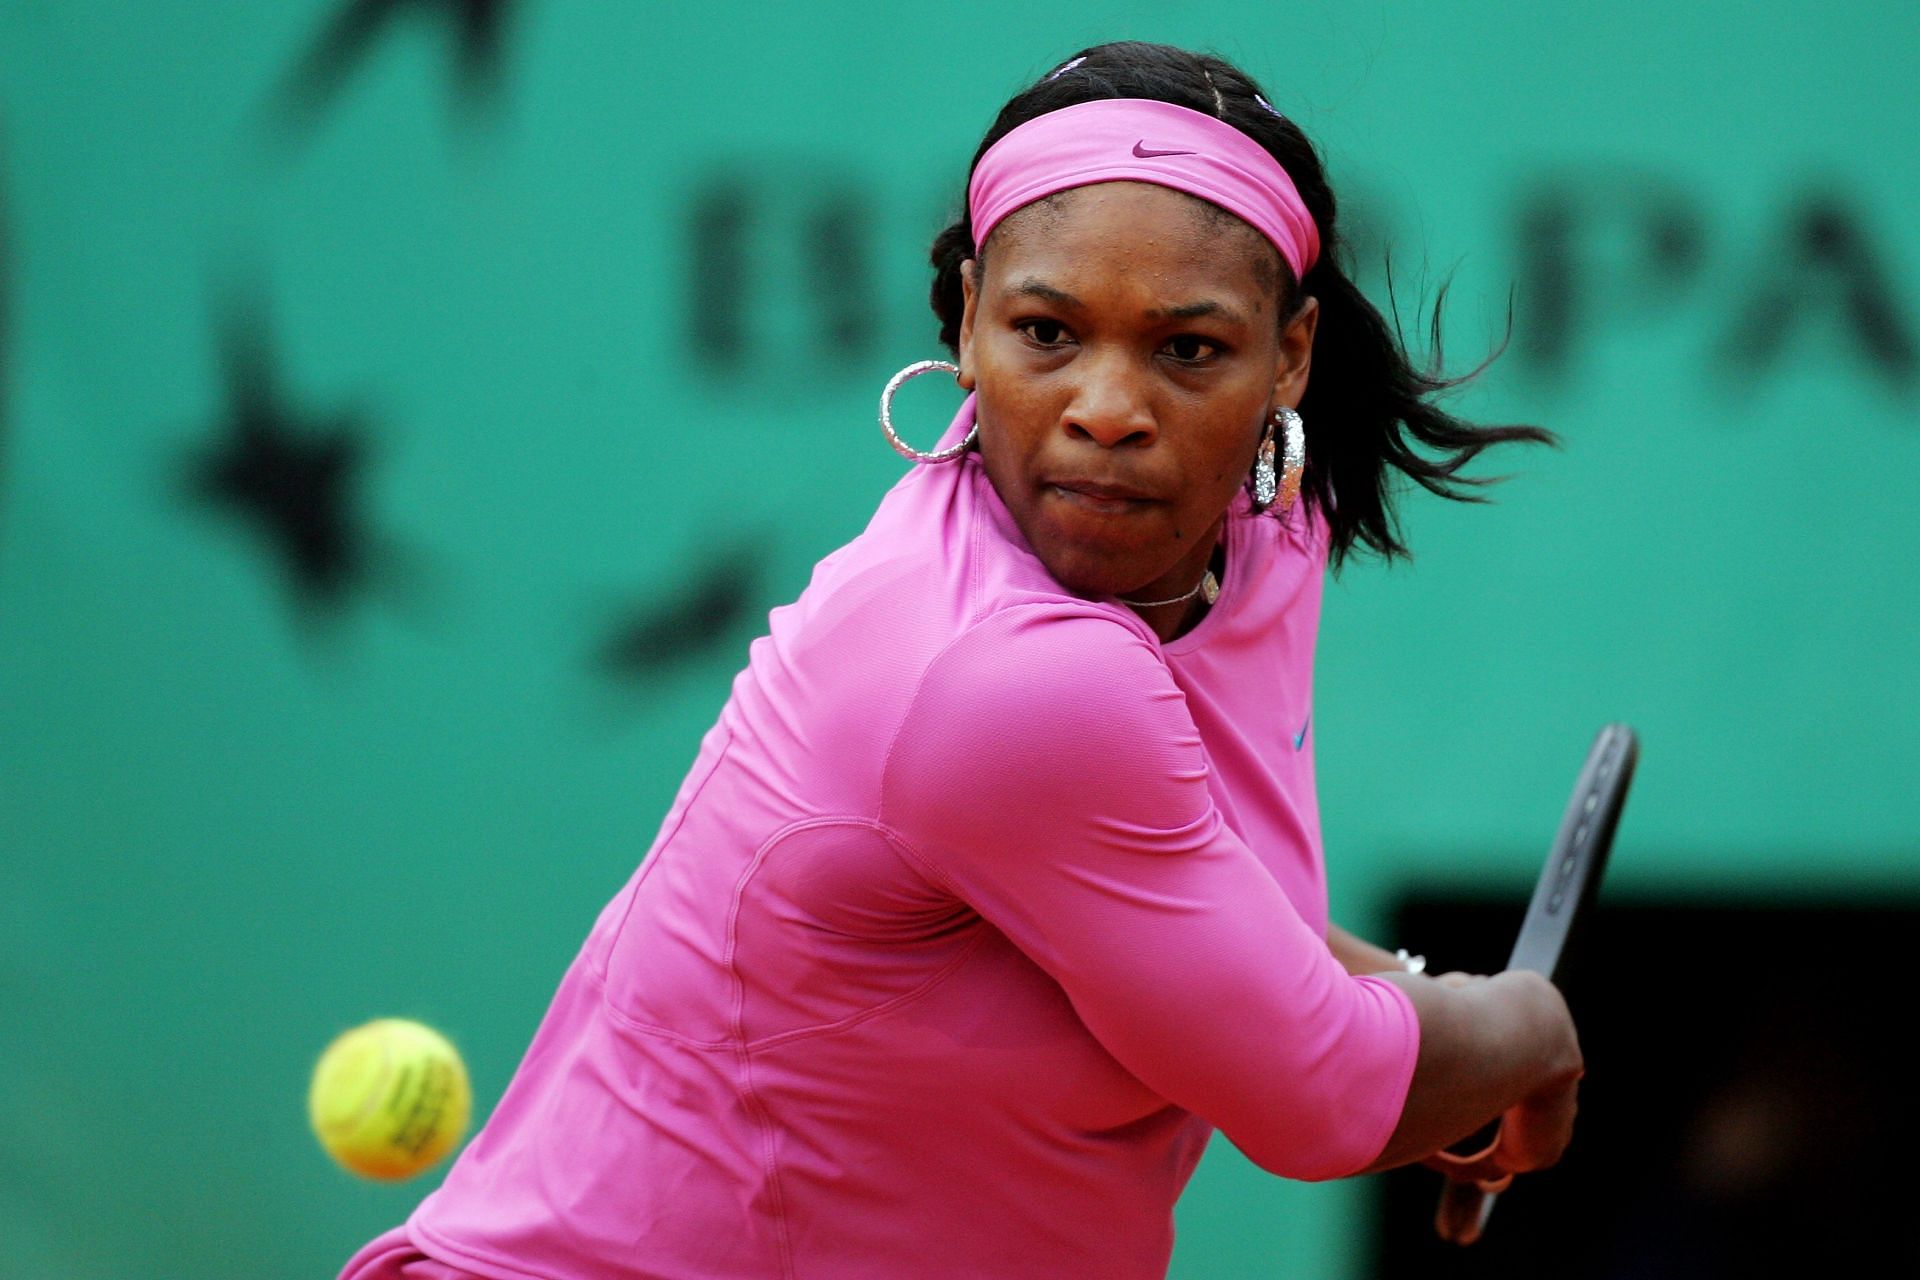 Serena Williams practicing with Sascha Bajin before Roland Garros in 2007